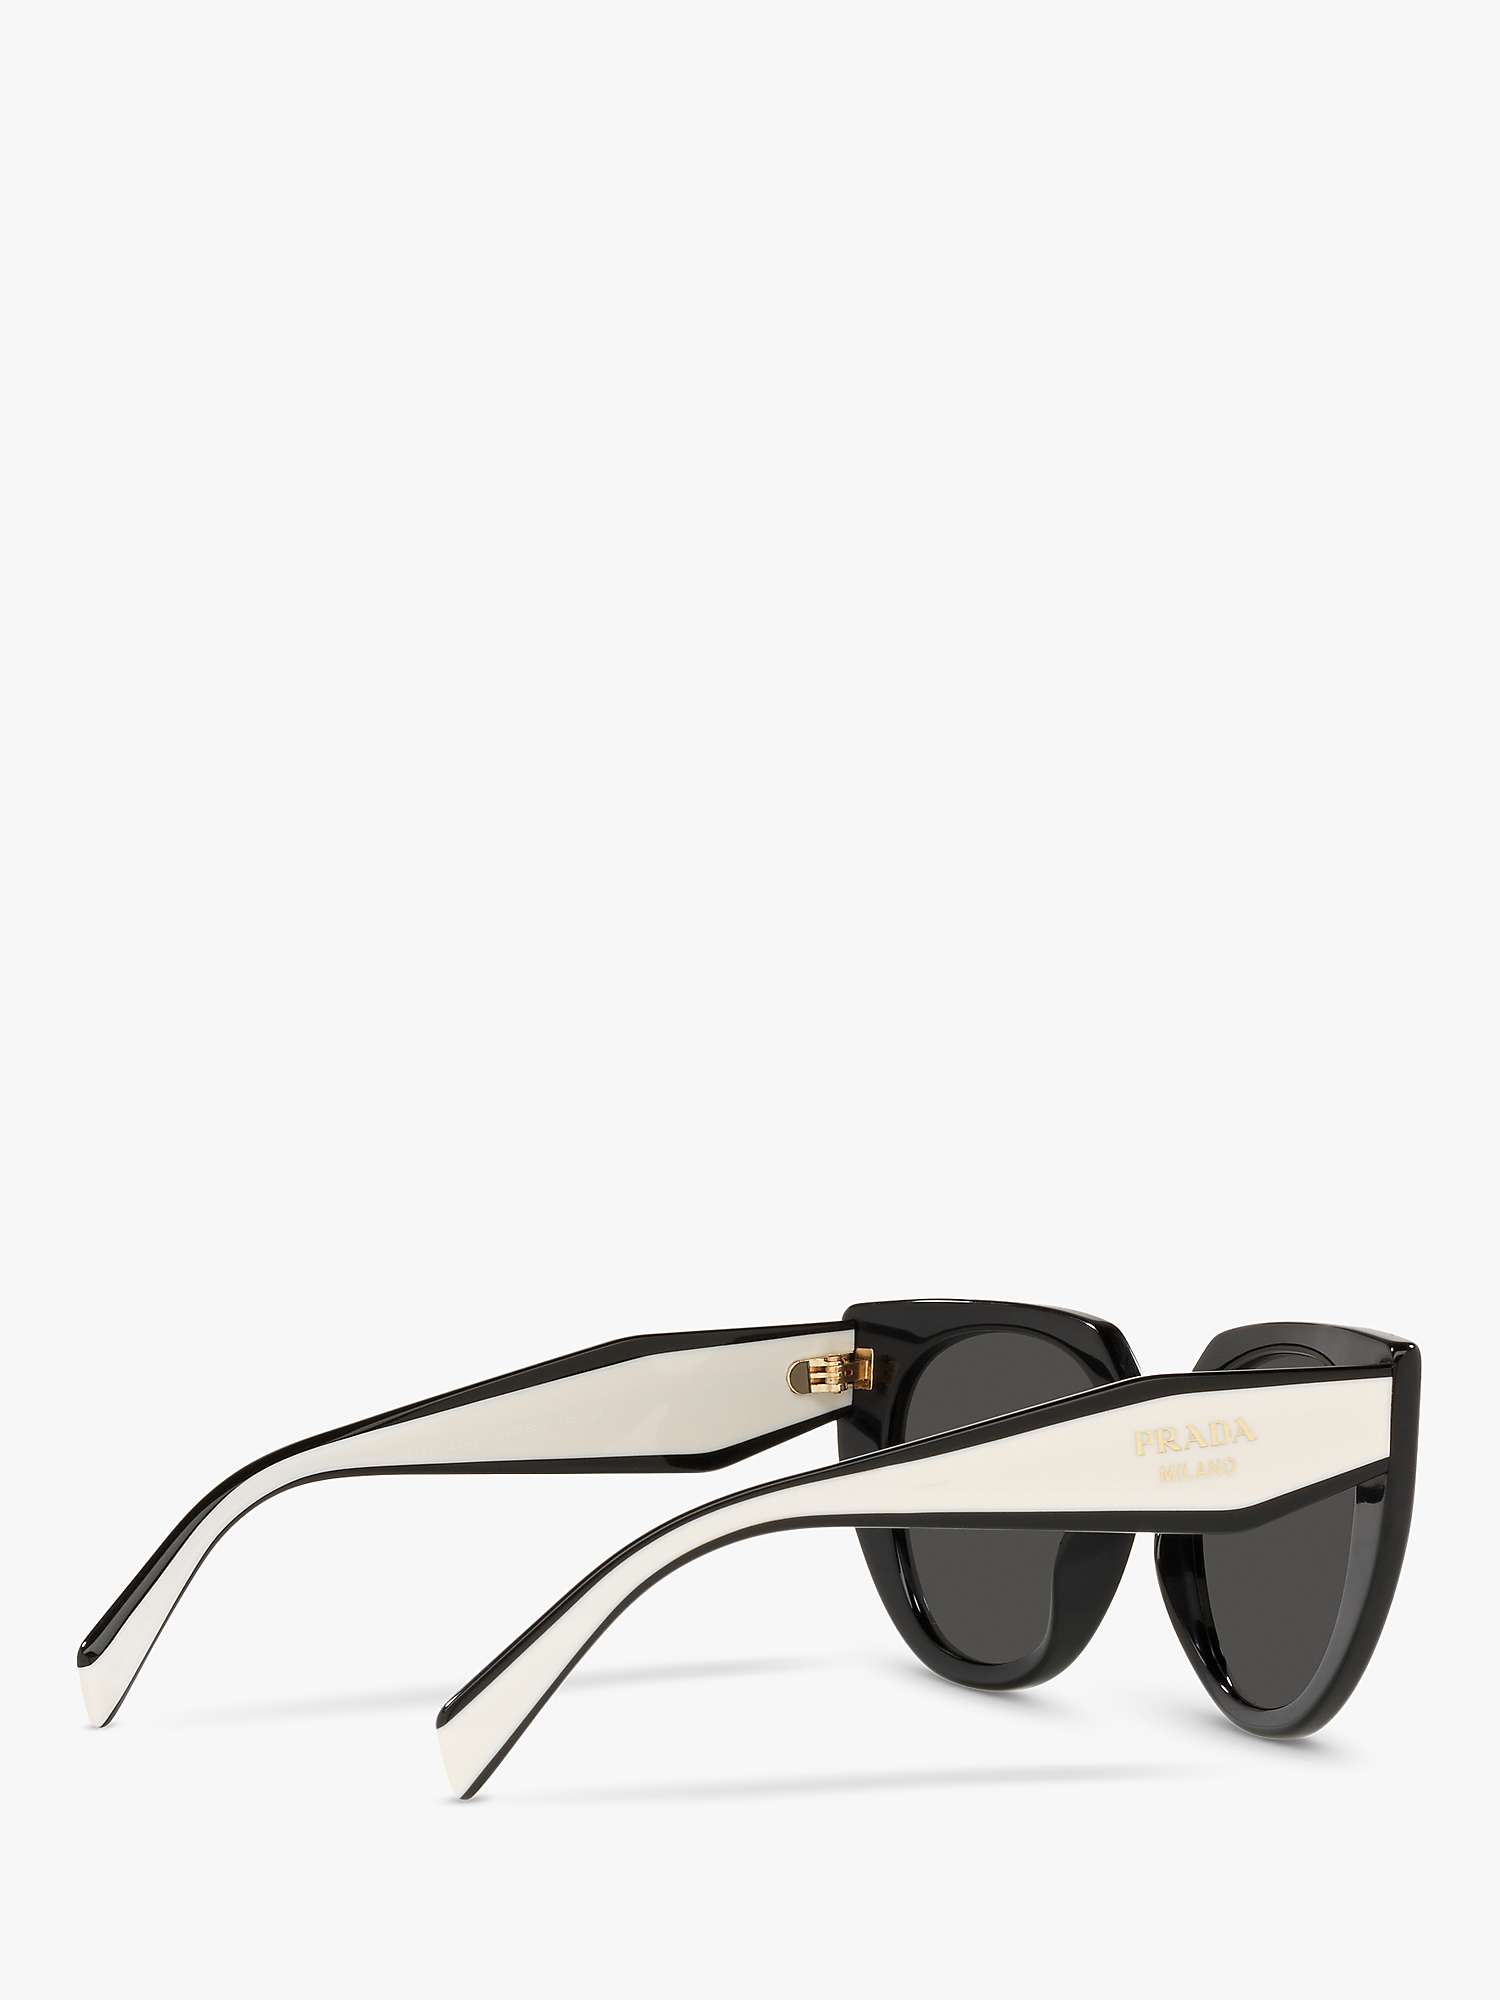 Buy Prada PR 14WS Women's Cat's Eye Sunglasses, Black Chalk/Black Online at johnlewis.com